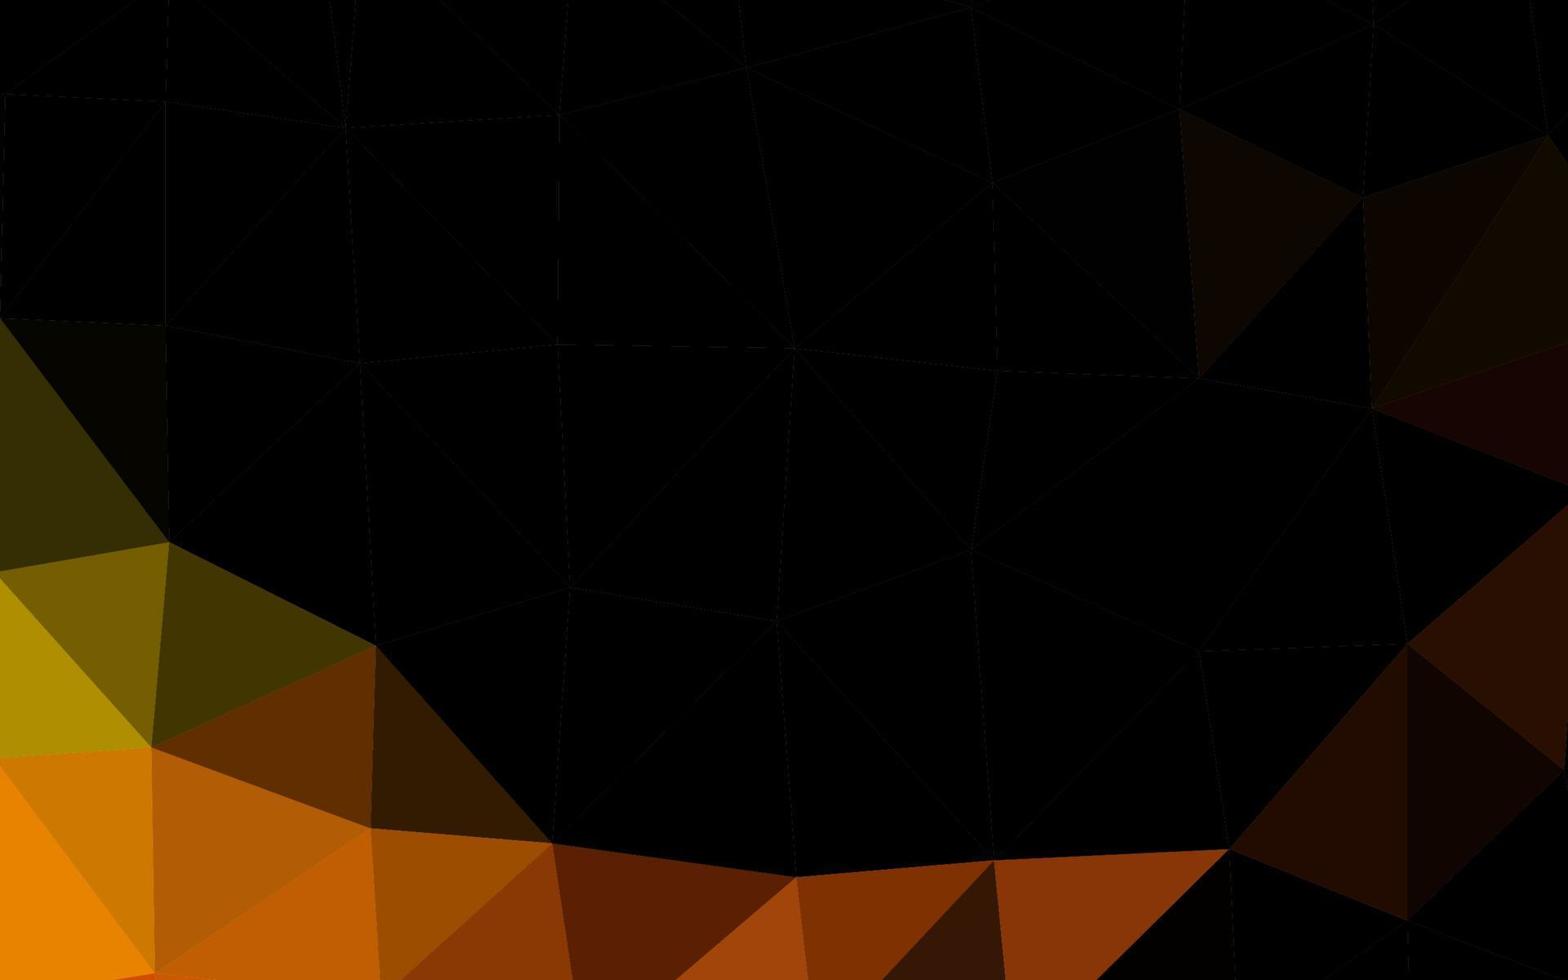 Dark Orange vector triangle mosaic cover.